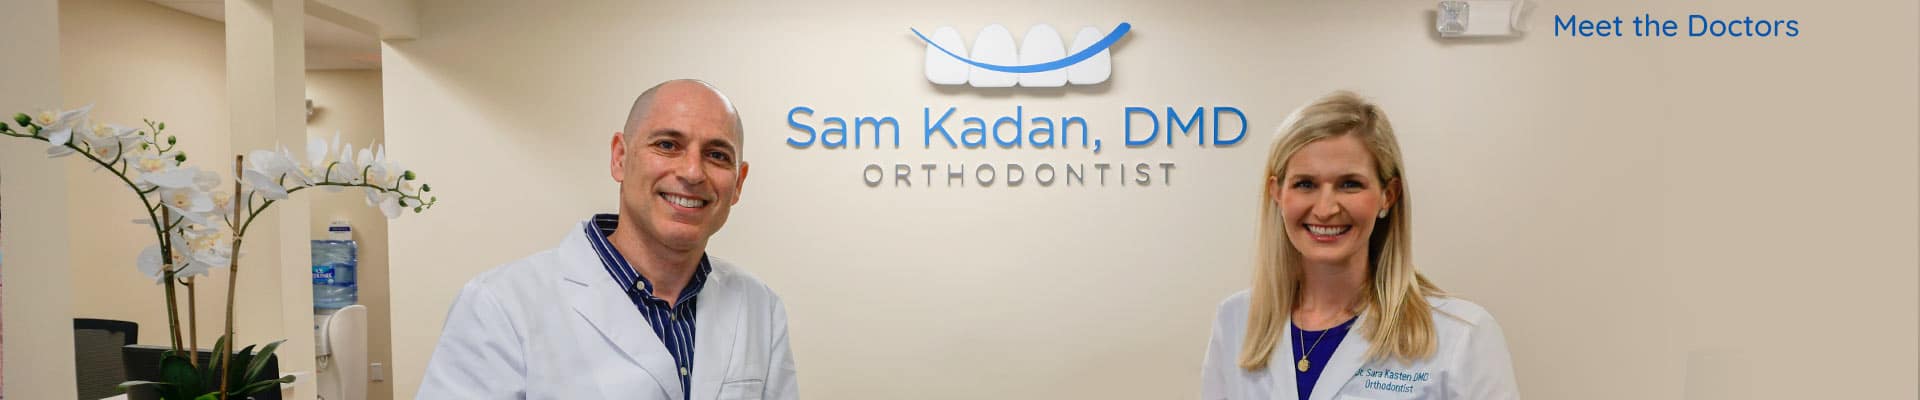 Meet the Doctors at Kadan Orthodontics in Devon, PA